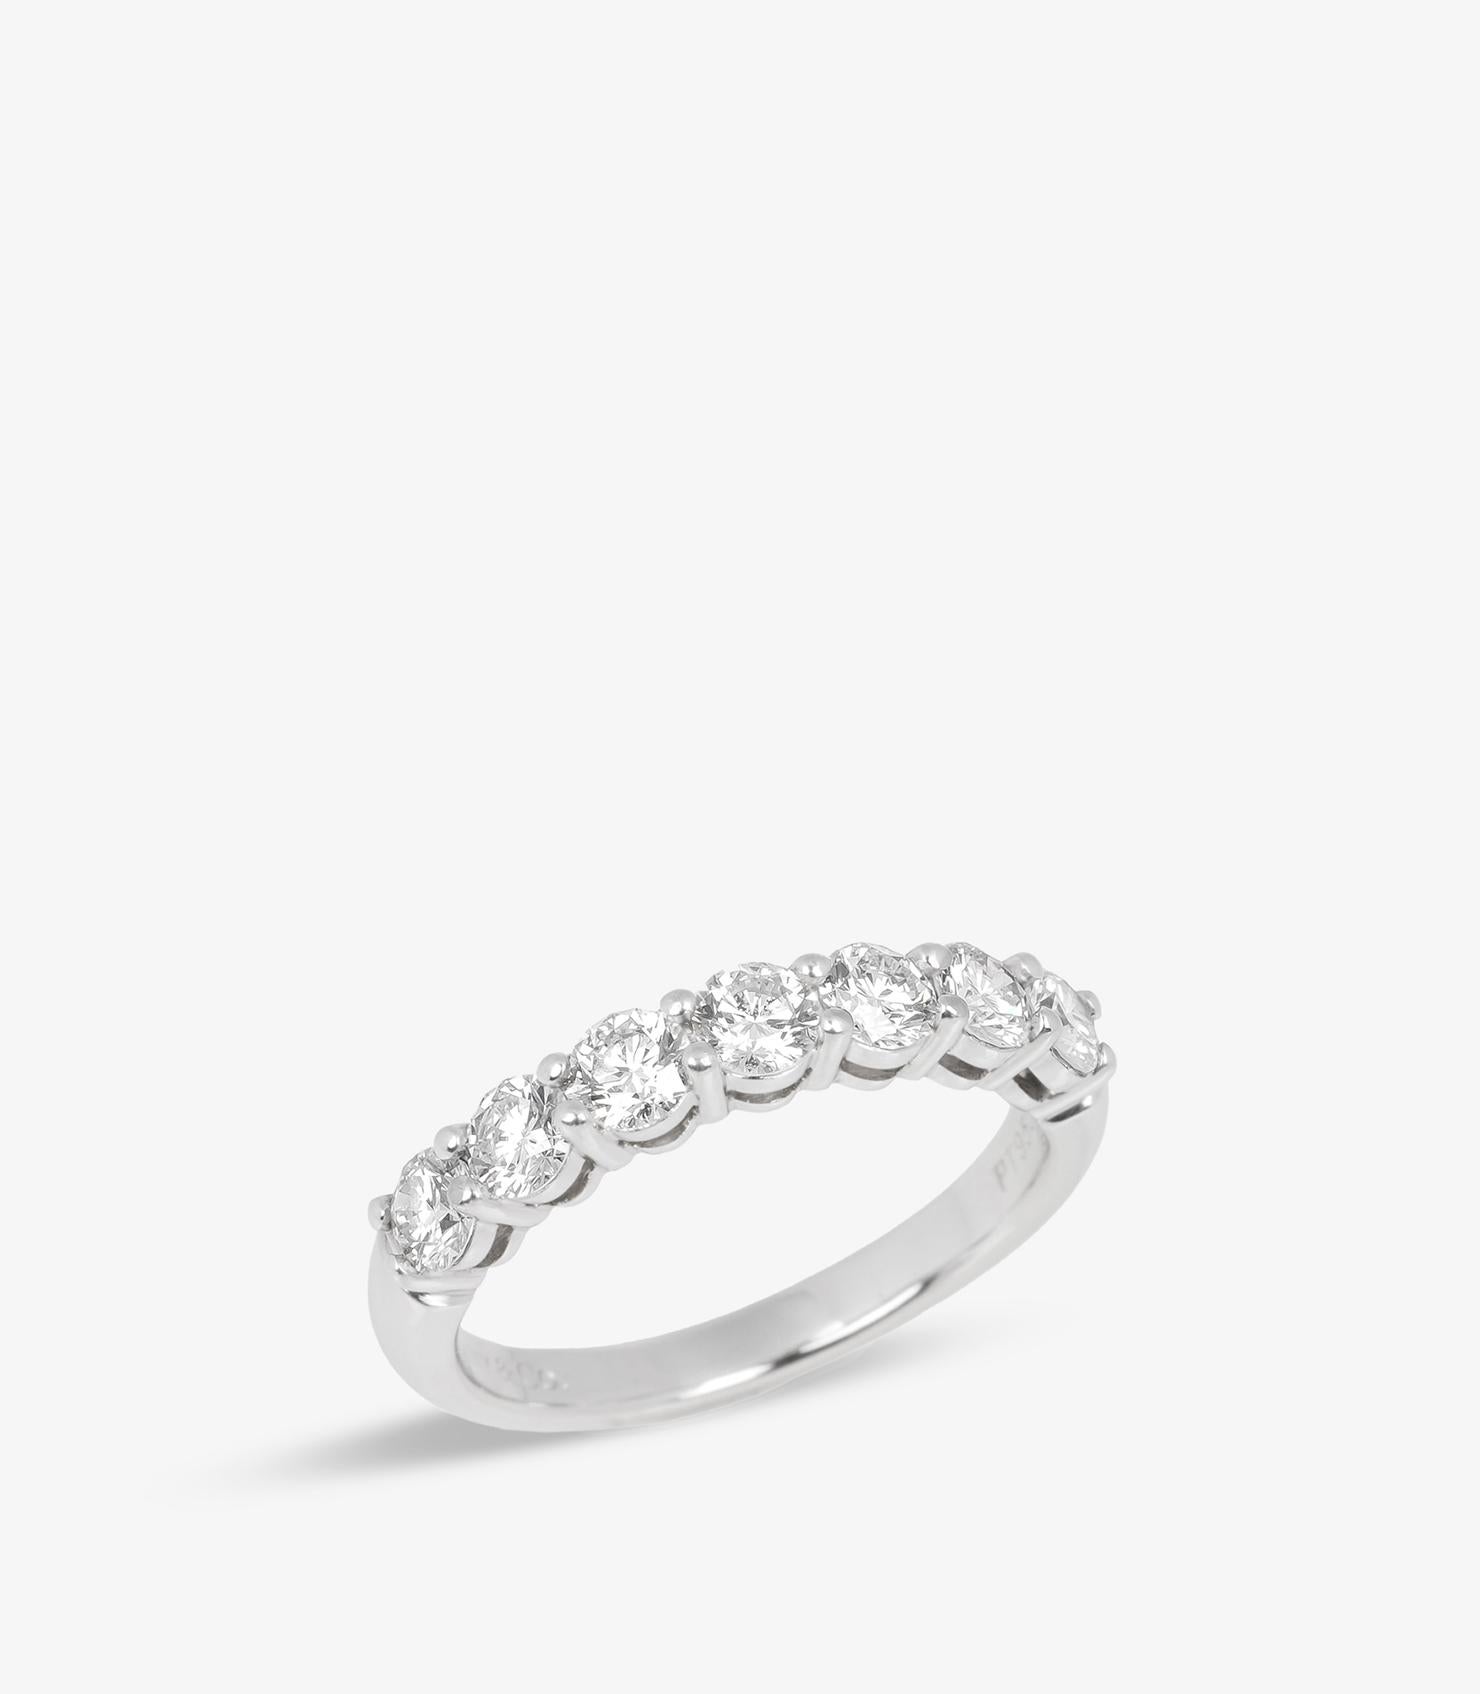 Tiffany & Co. 0.91ct Brilliant Cut Diamond Platinum Eternity Ring

Brand- Tiffany & Co.
Model- Half Eternity Ring
Product Type- Ring
Accompanied By- Tiffany & Co. Box
Material(s)- Platinum
Gemstone- Diamond
UK Ring Size- L 1/2
EU Ring Size- 52
US